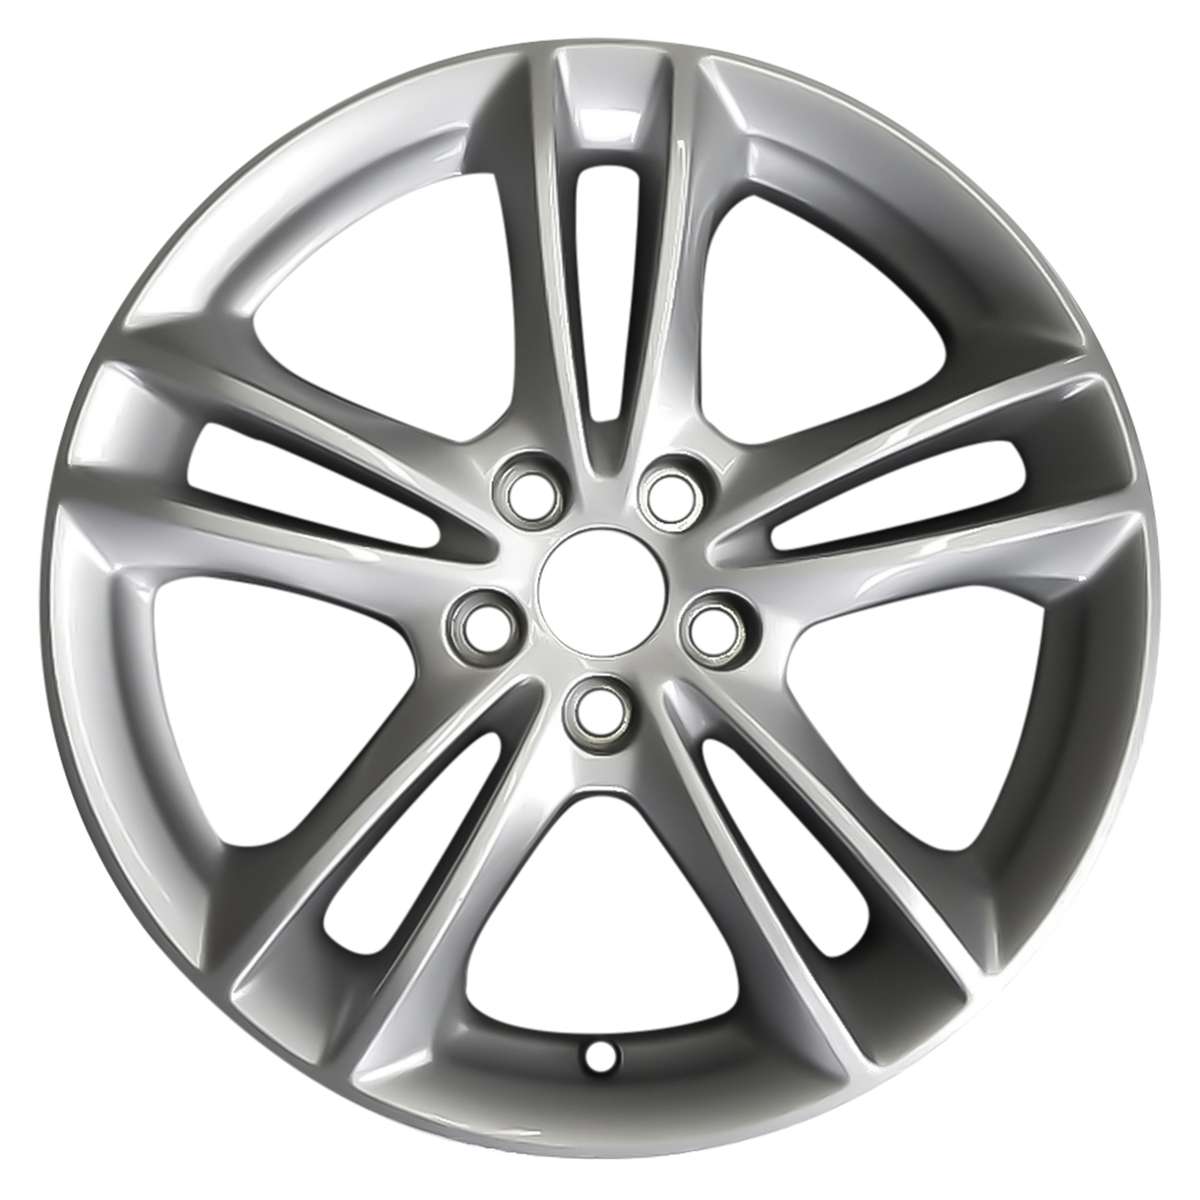 2017 Ford Fusion 17" OEM Wheel Rim W3984S